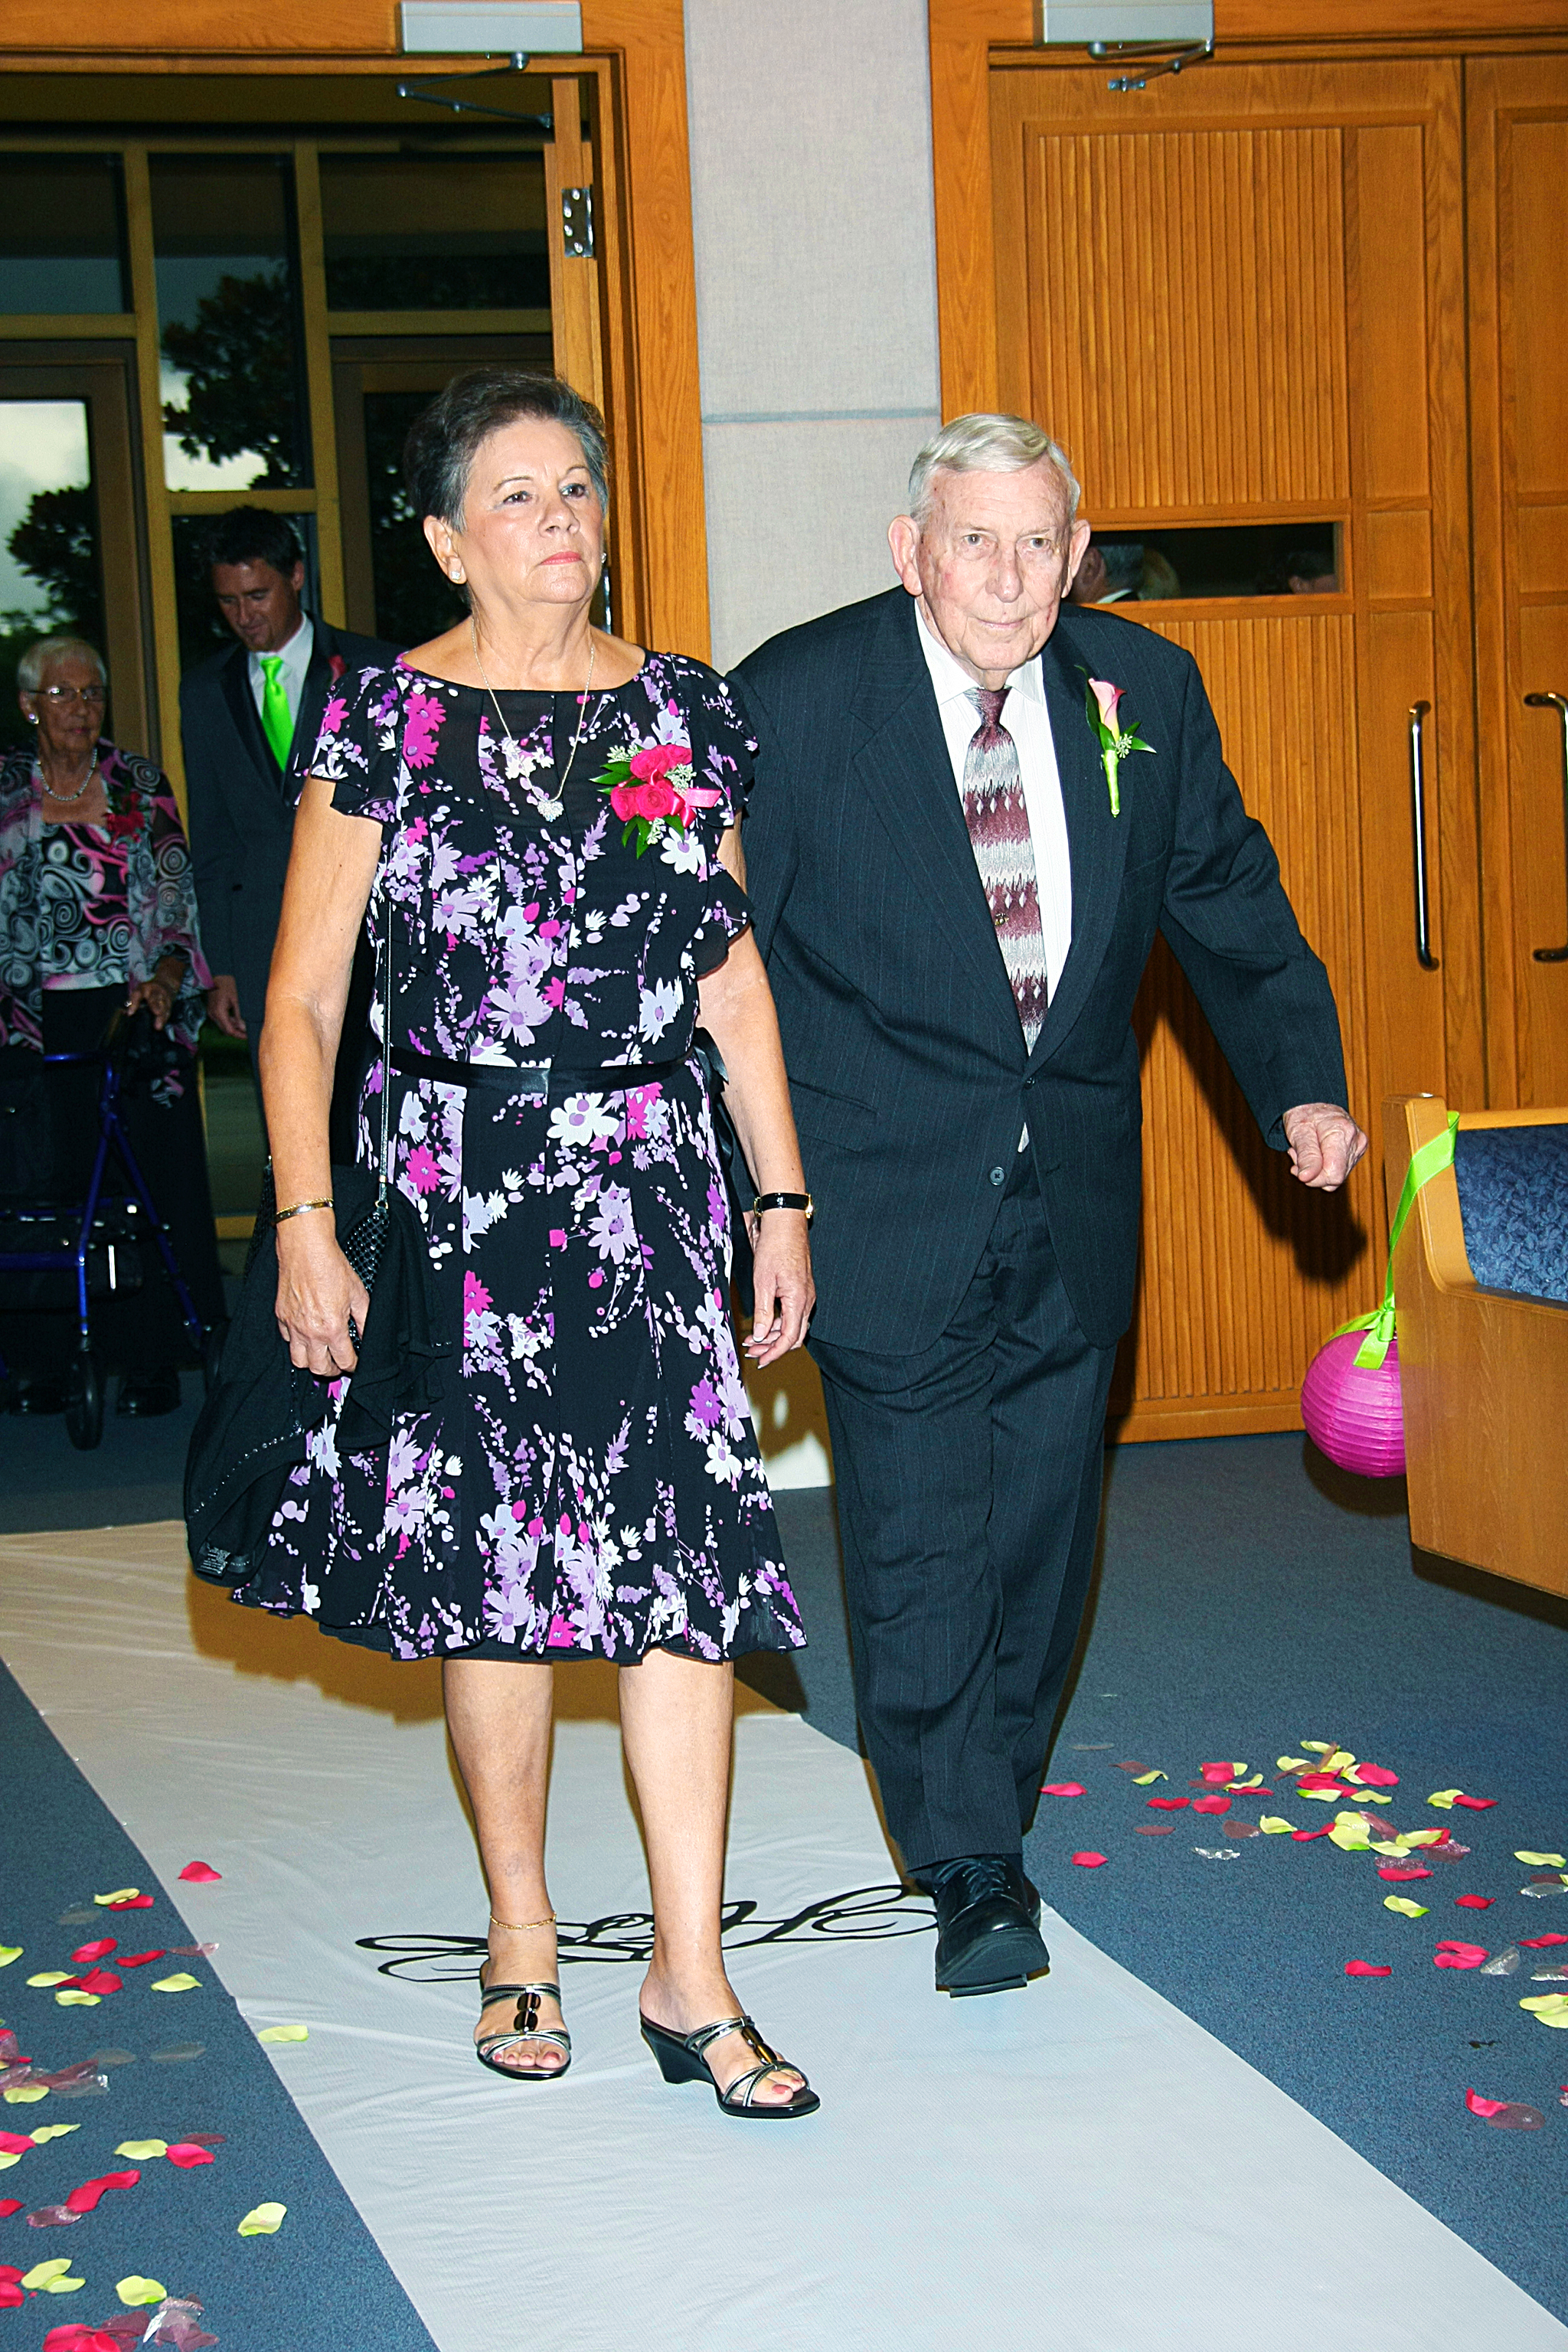 Grandparents walking down aisle